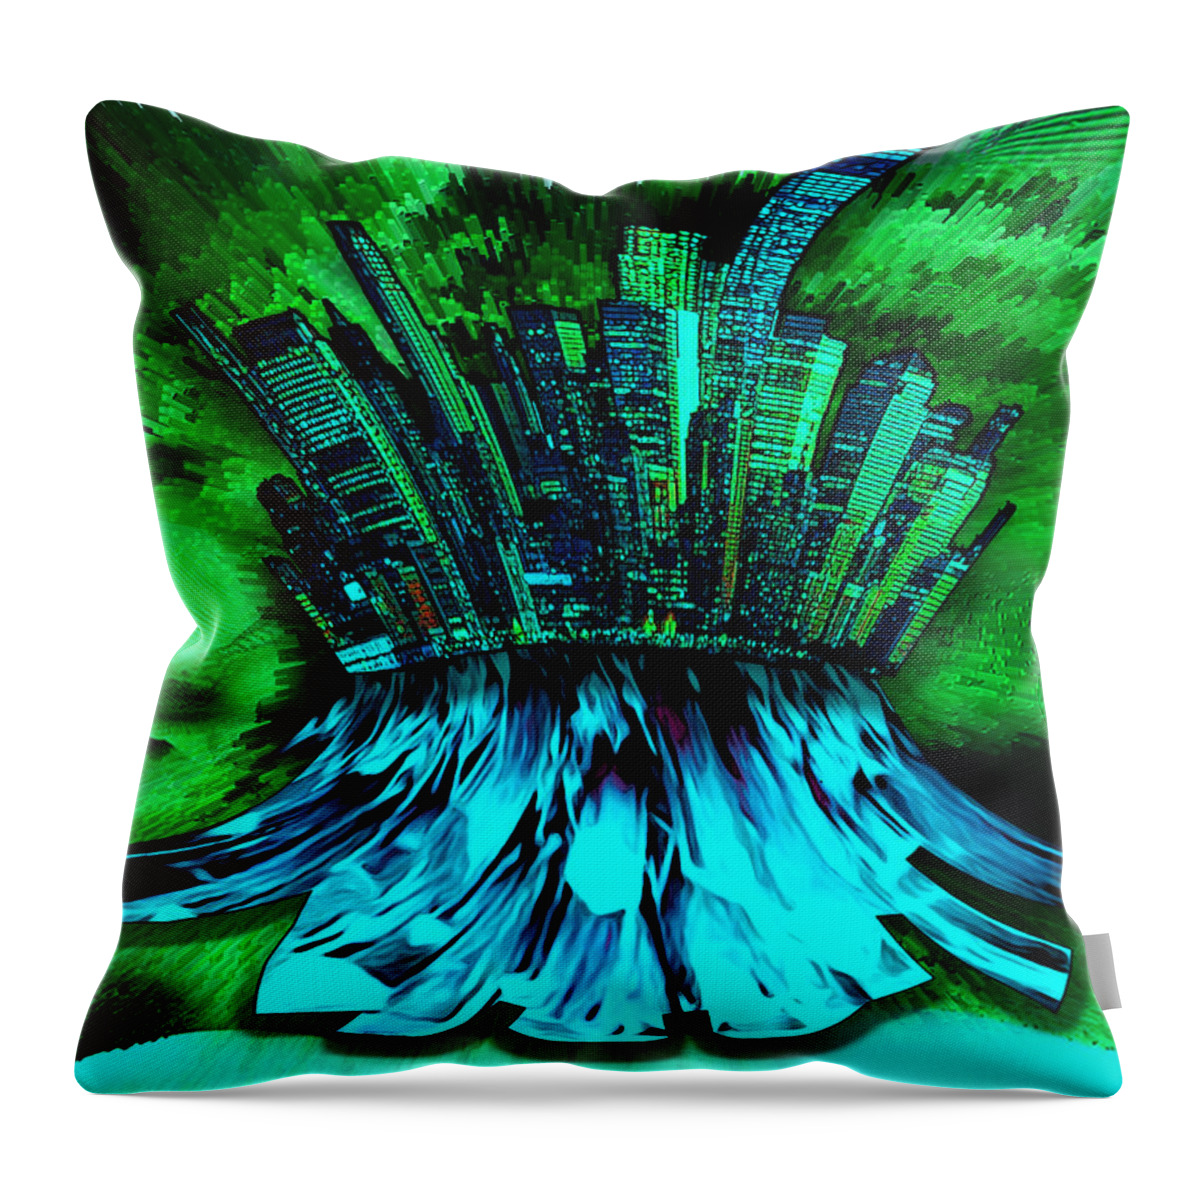 Urban Art Throw Pillow featuring the digital art Cityscape Blue by Kanisha Moye